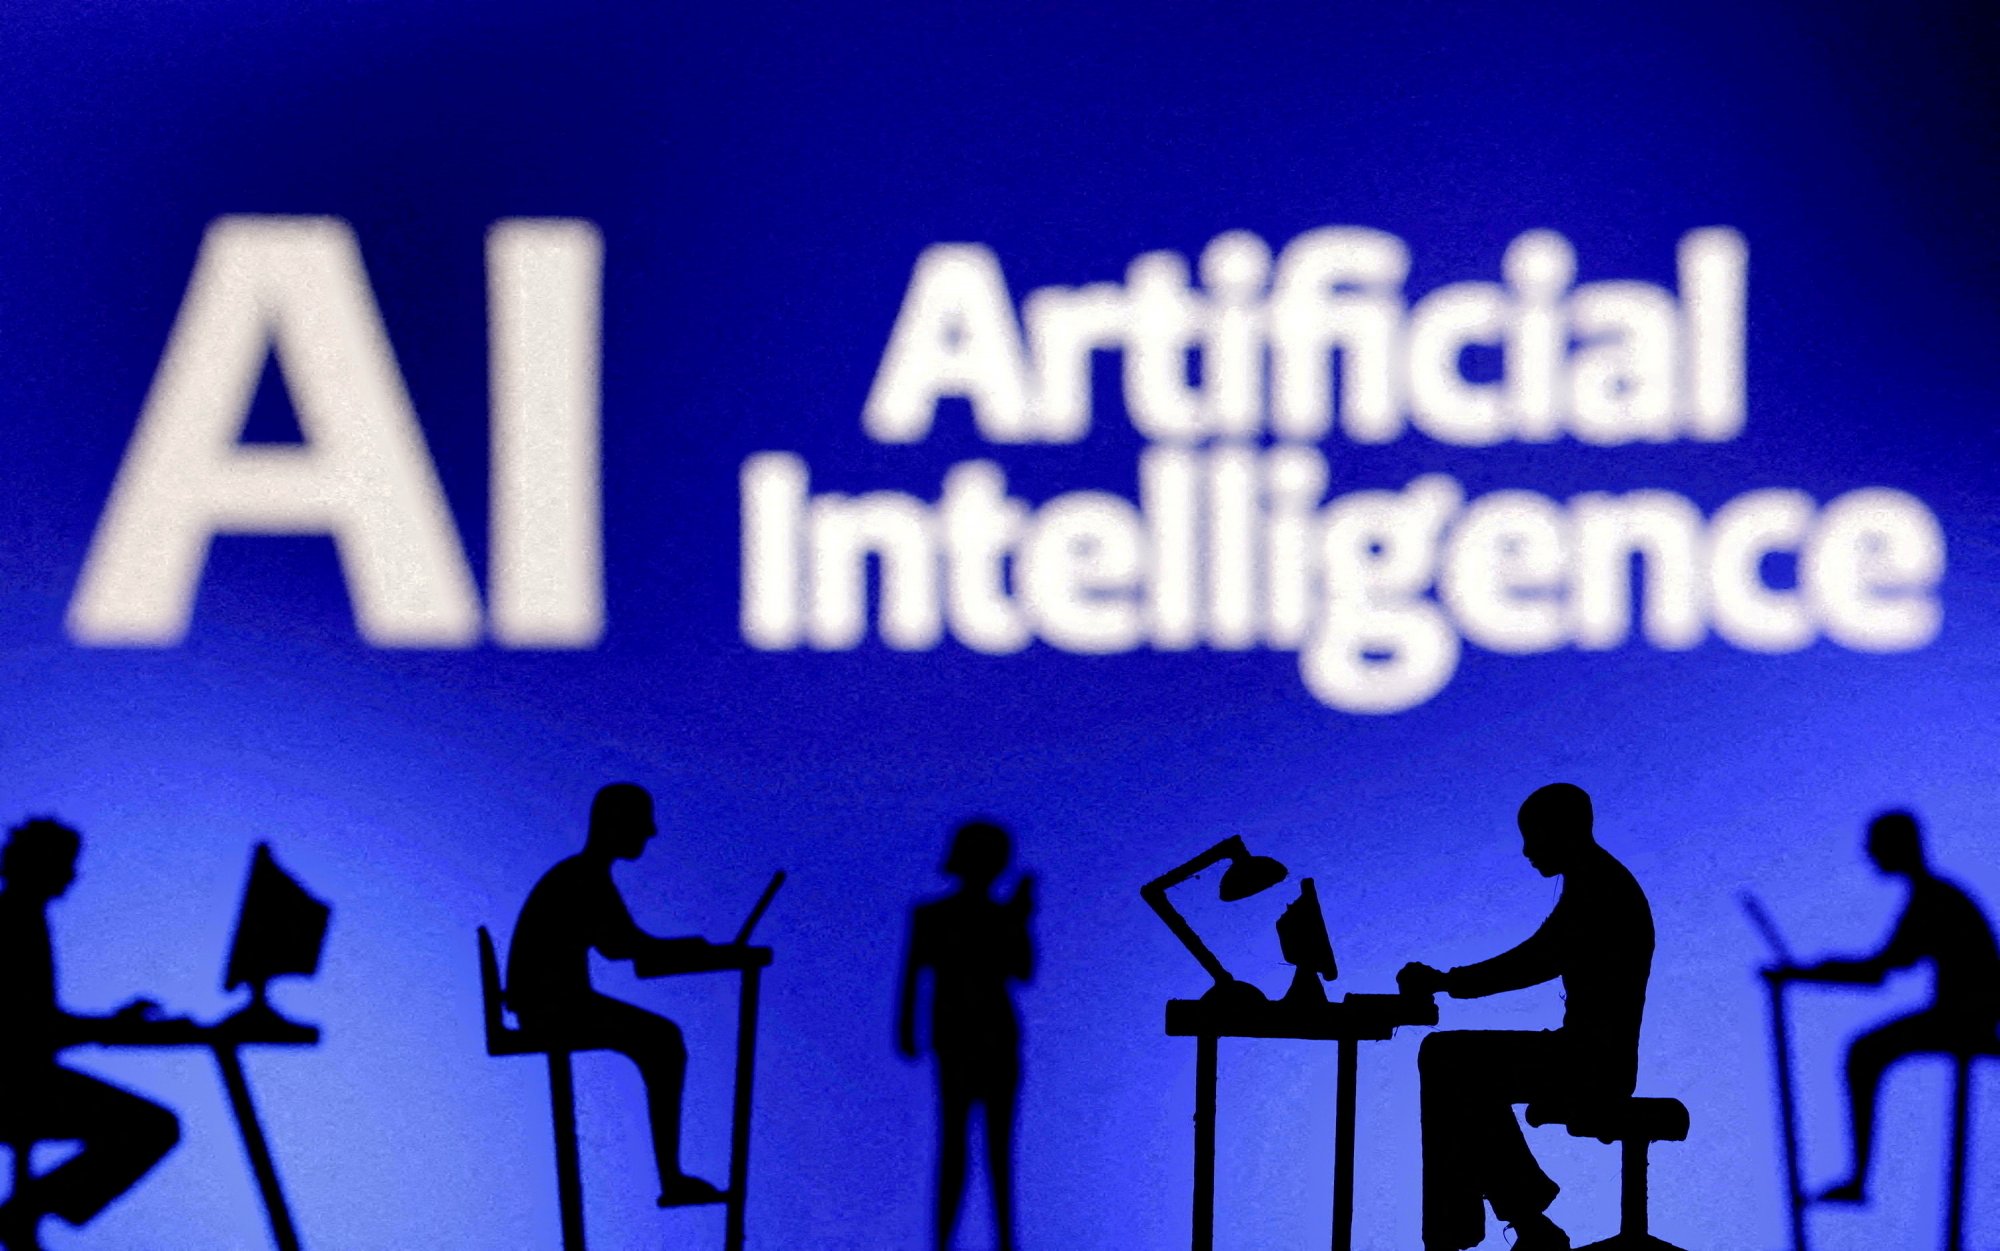 International Monetary Fund: Artificial Intelligence will hit the labor market “like a tsunami”